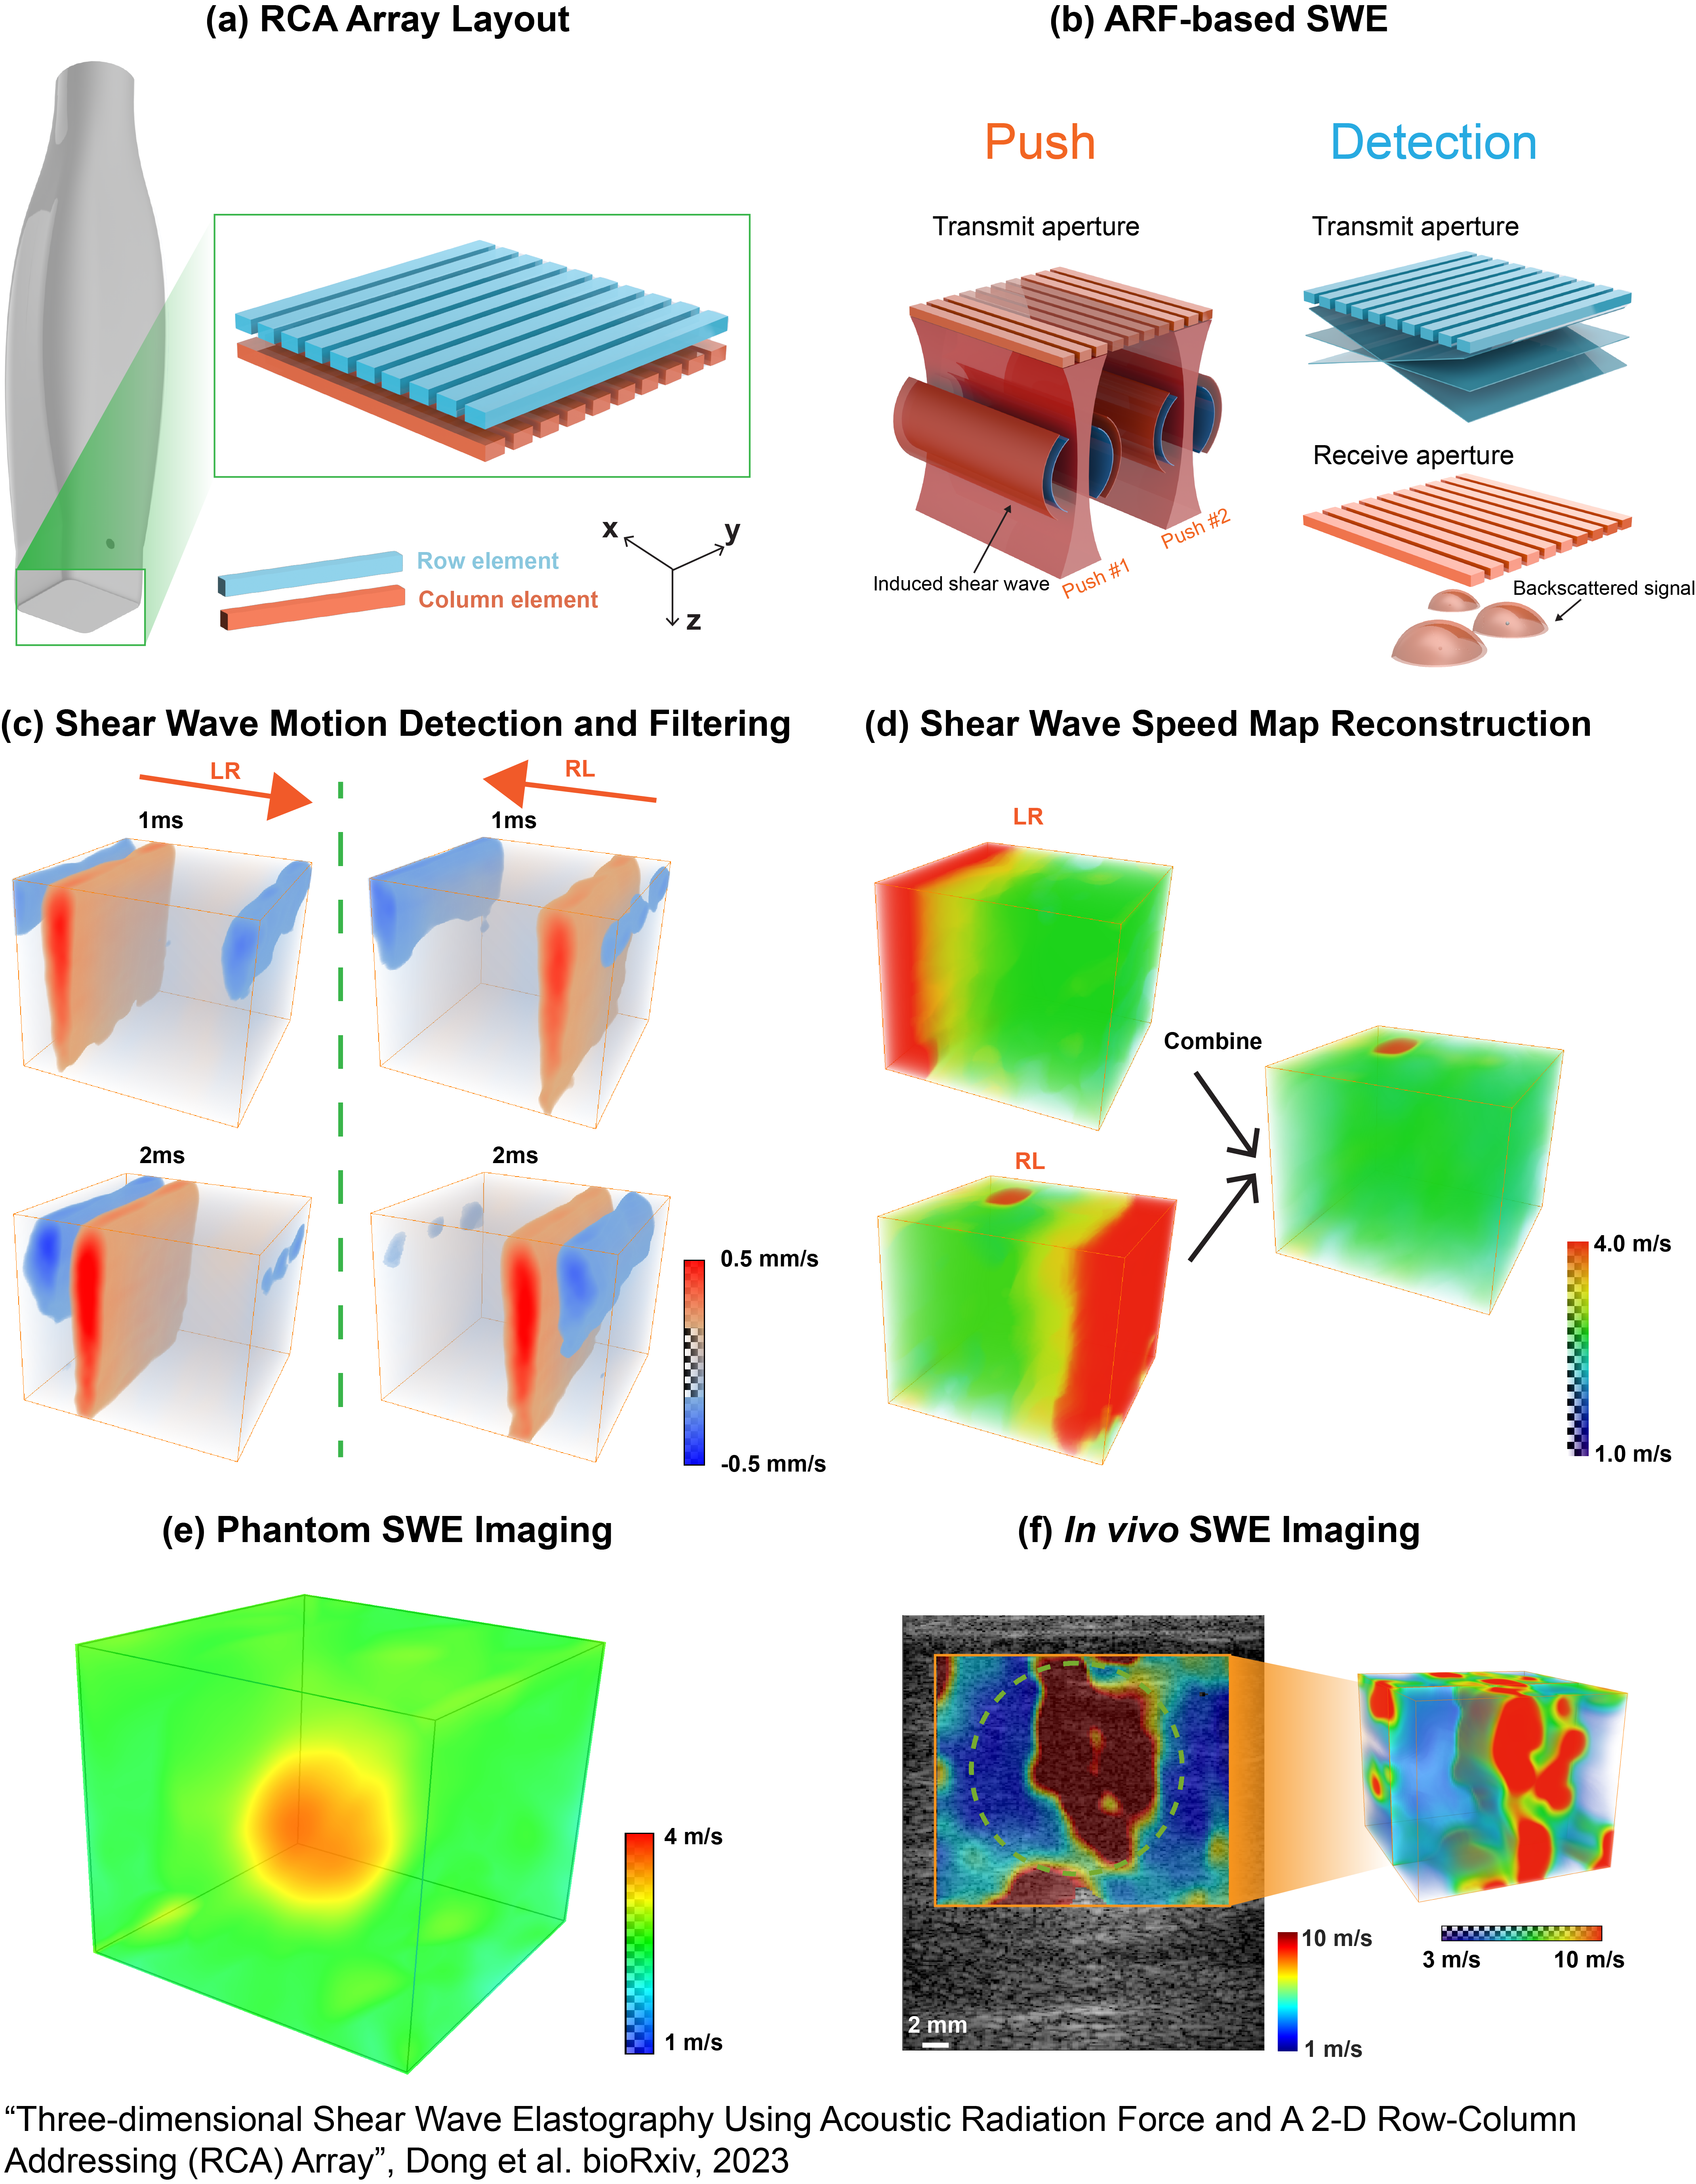 3D ARF-SWE imaging